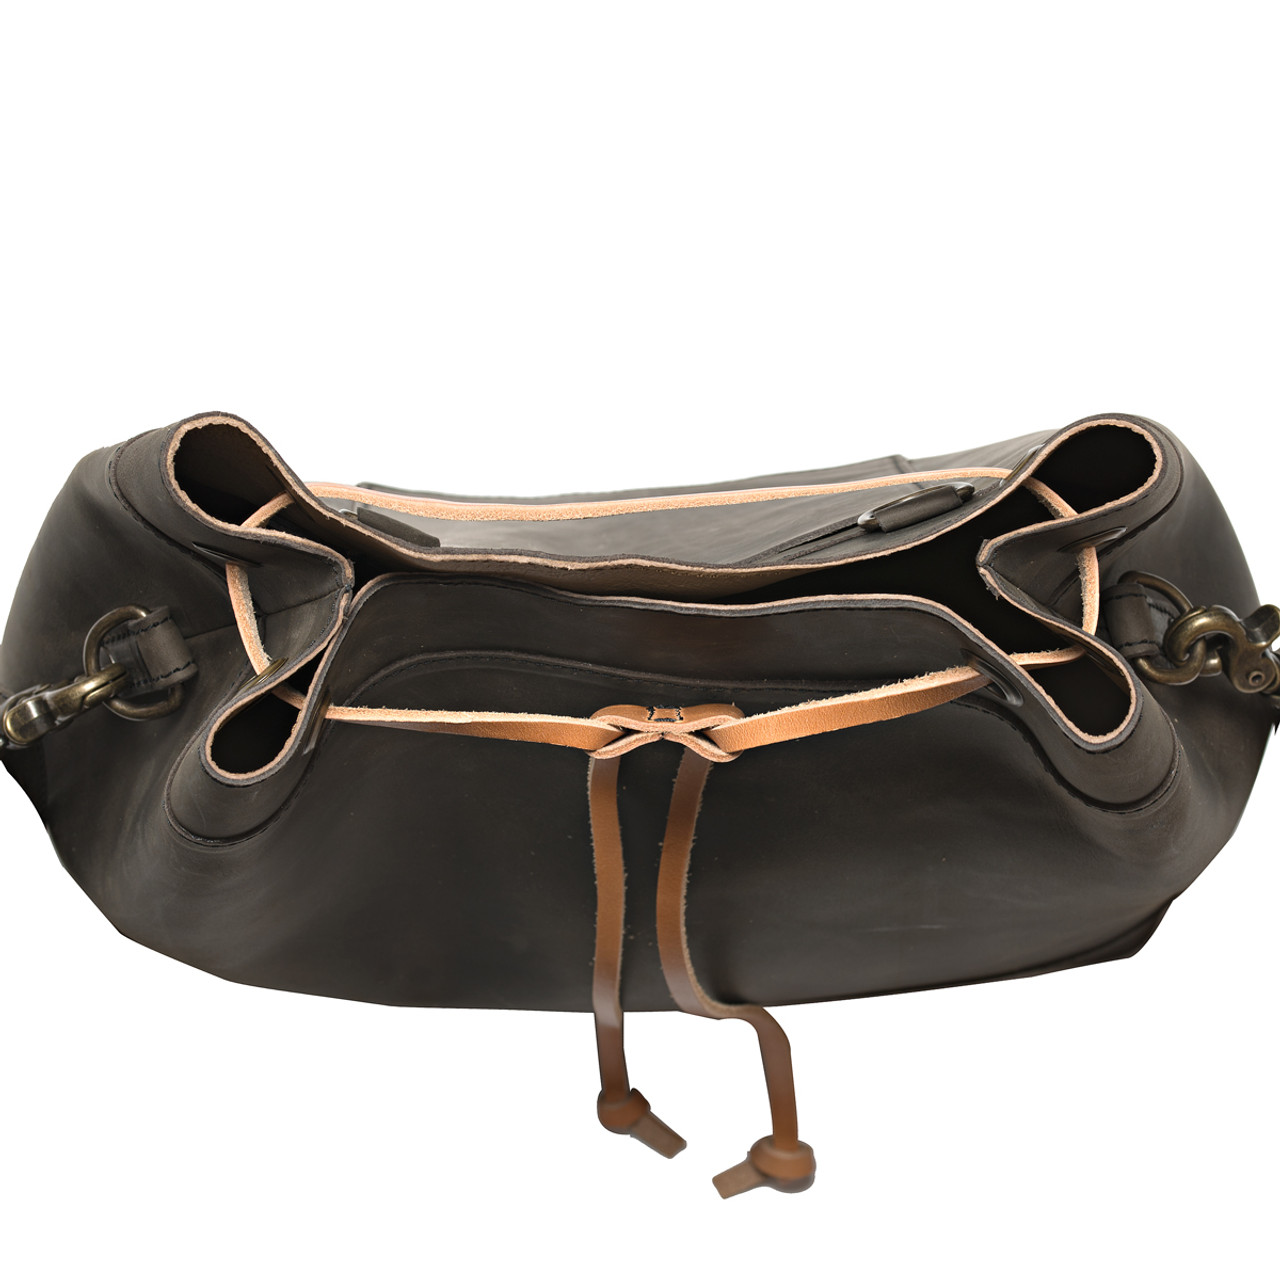 The Sak Ivy Drawstring Bucket Bag Leather - Teak Vachetta